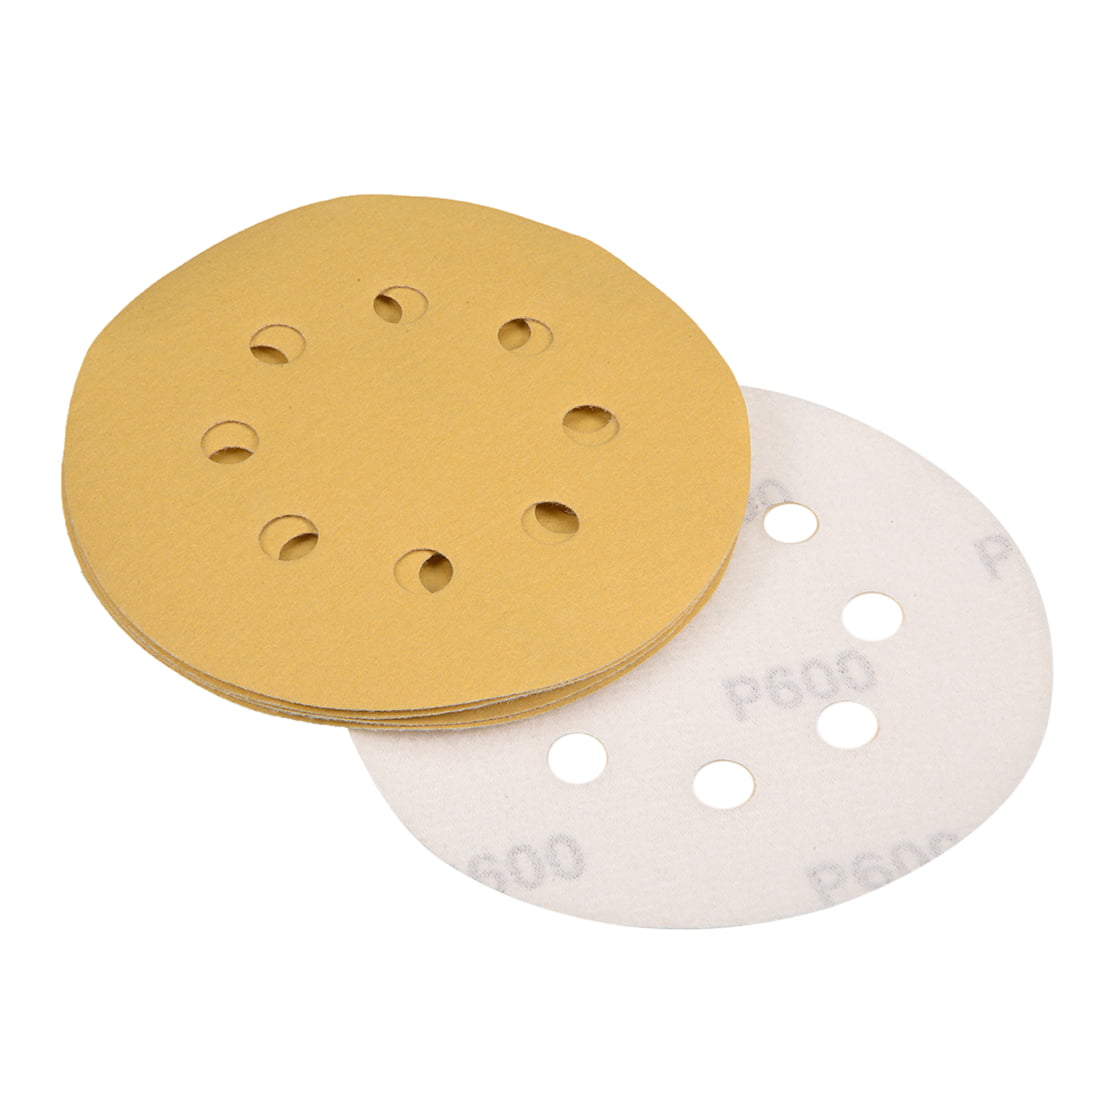 Sandpaper 5" KLINGSPOR 8 Hole Pads /// 40-600 GRIT /// 125mm Sanding Discs 